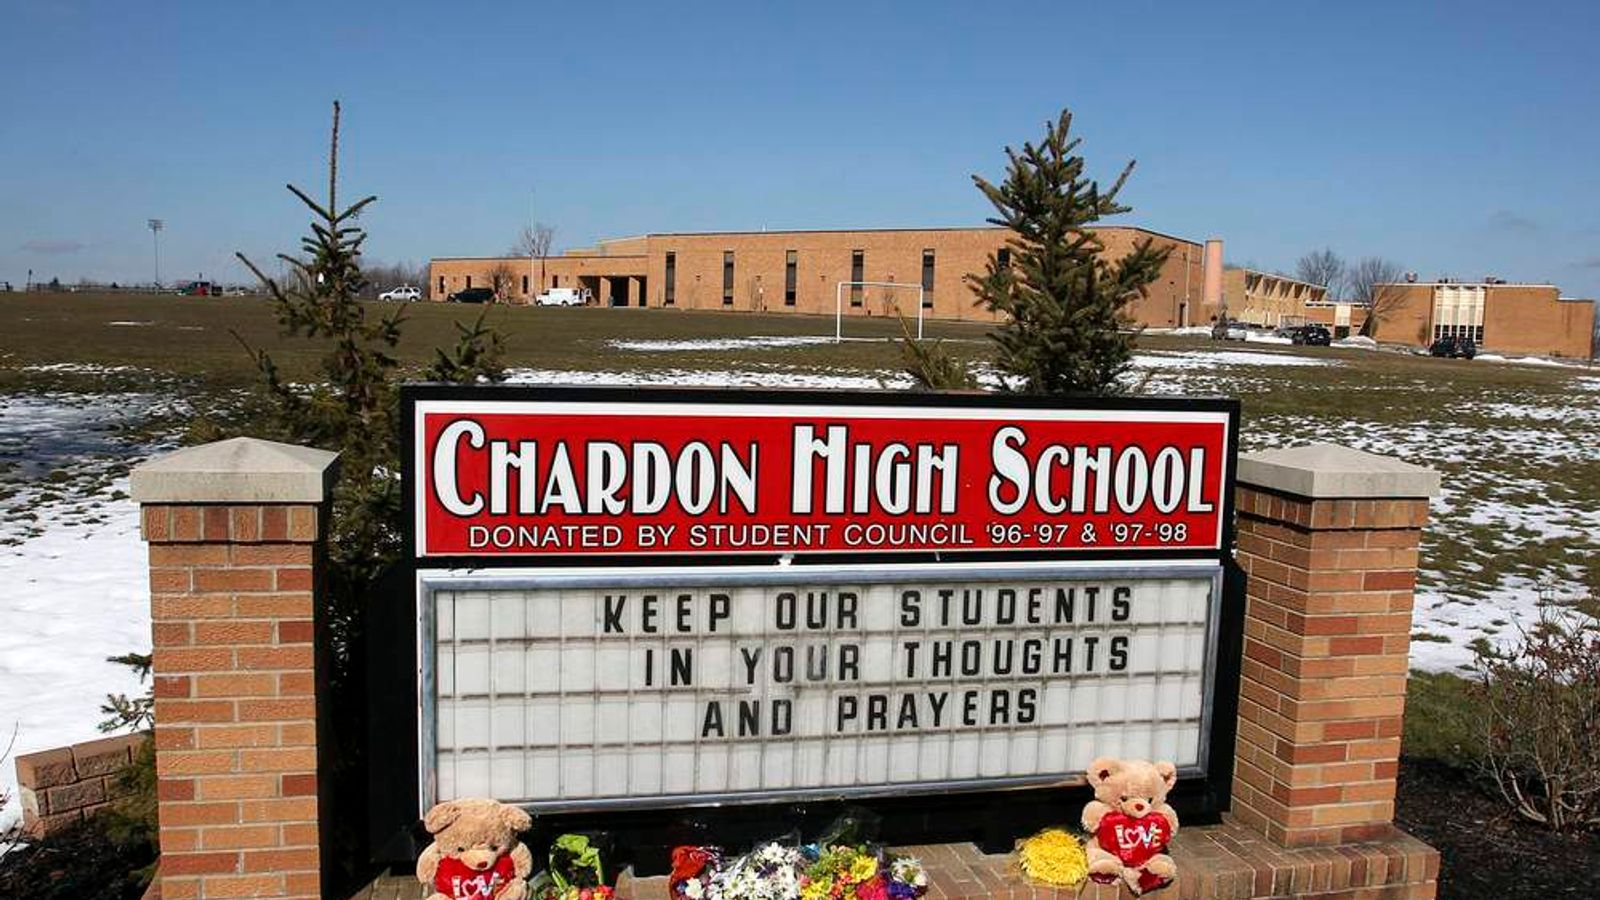 jackson township ohio school shooting